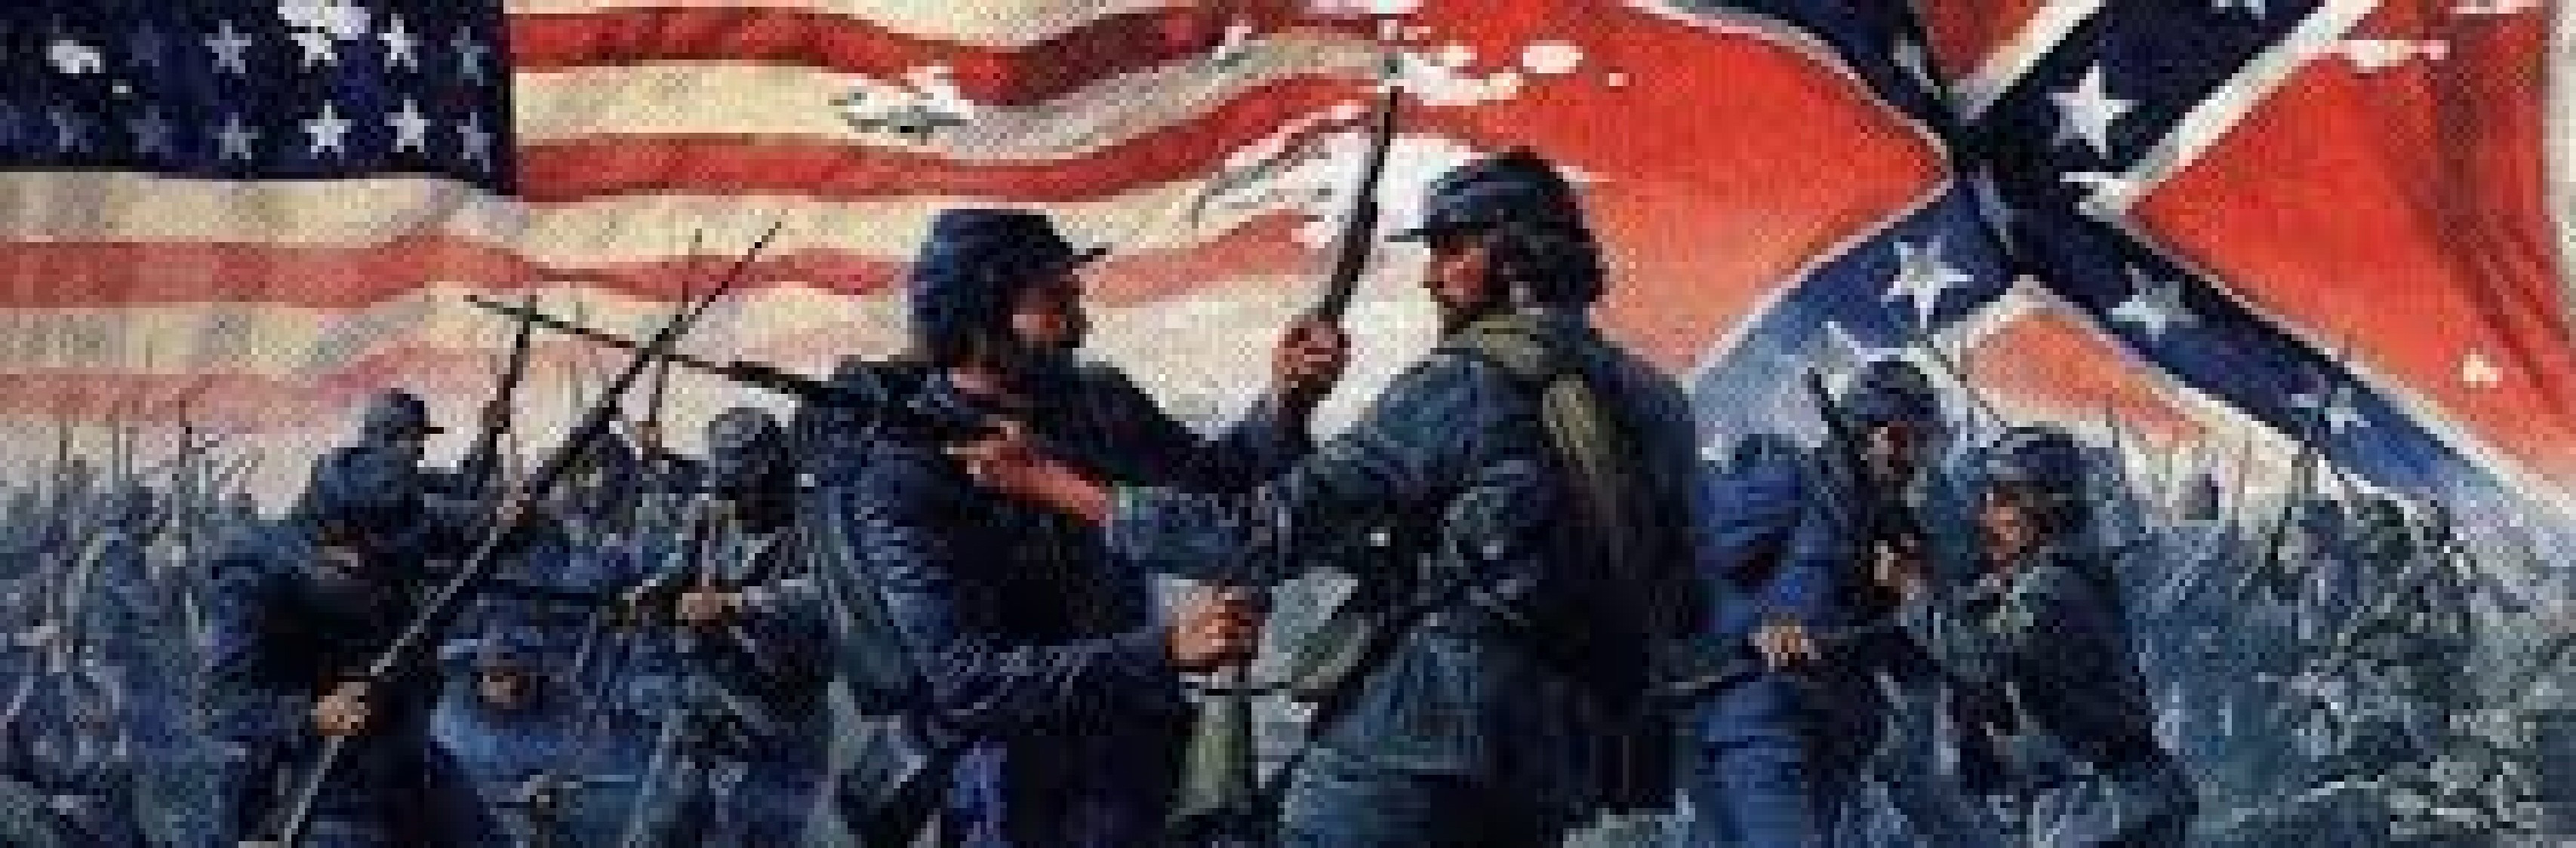 3413x1124 Free Civil War Wallpaper Fresh American Civil War Wallpaper 65 Images